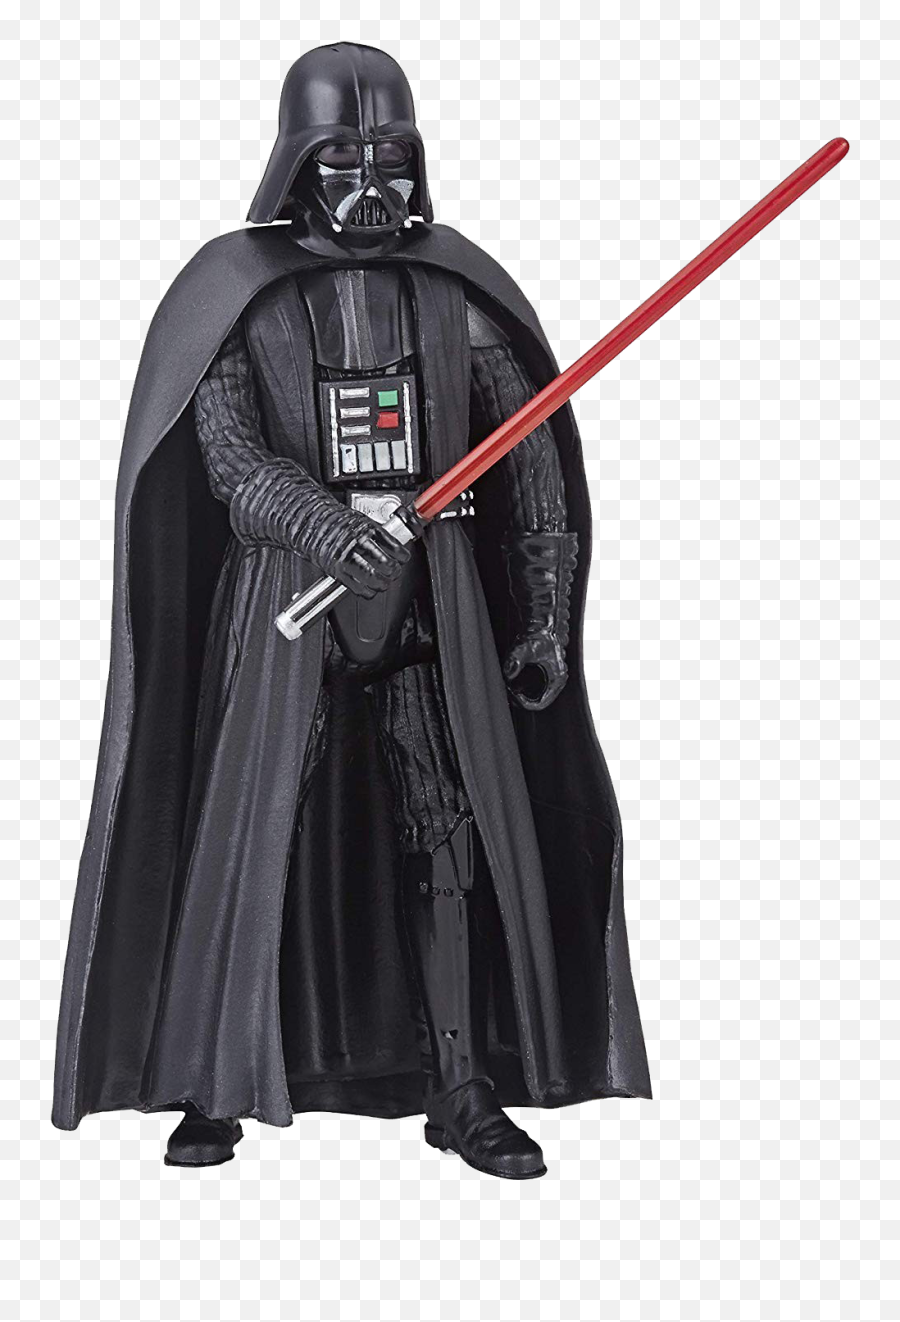 Darth Vader Png Free Pic - Star Wars Galaxy Of Adventures Action Figures,Darth Vader Png